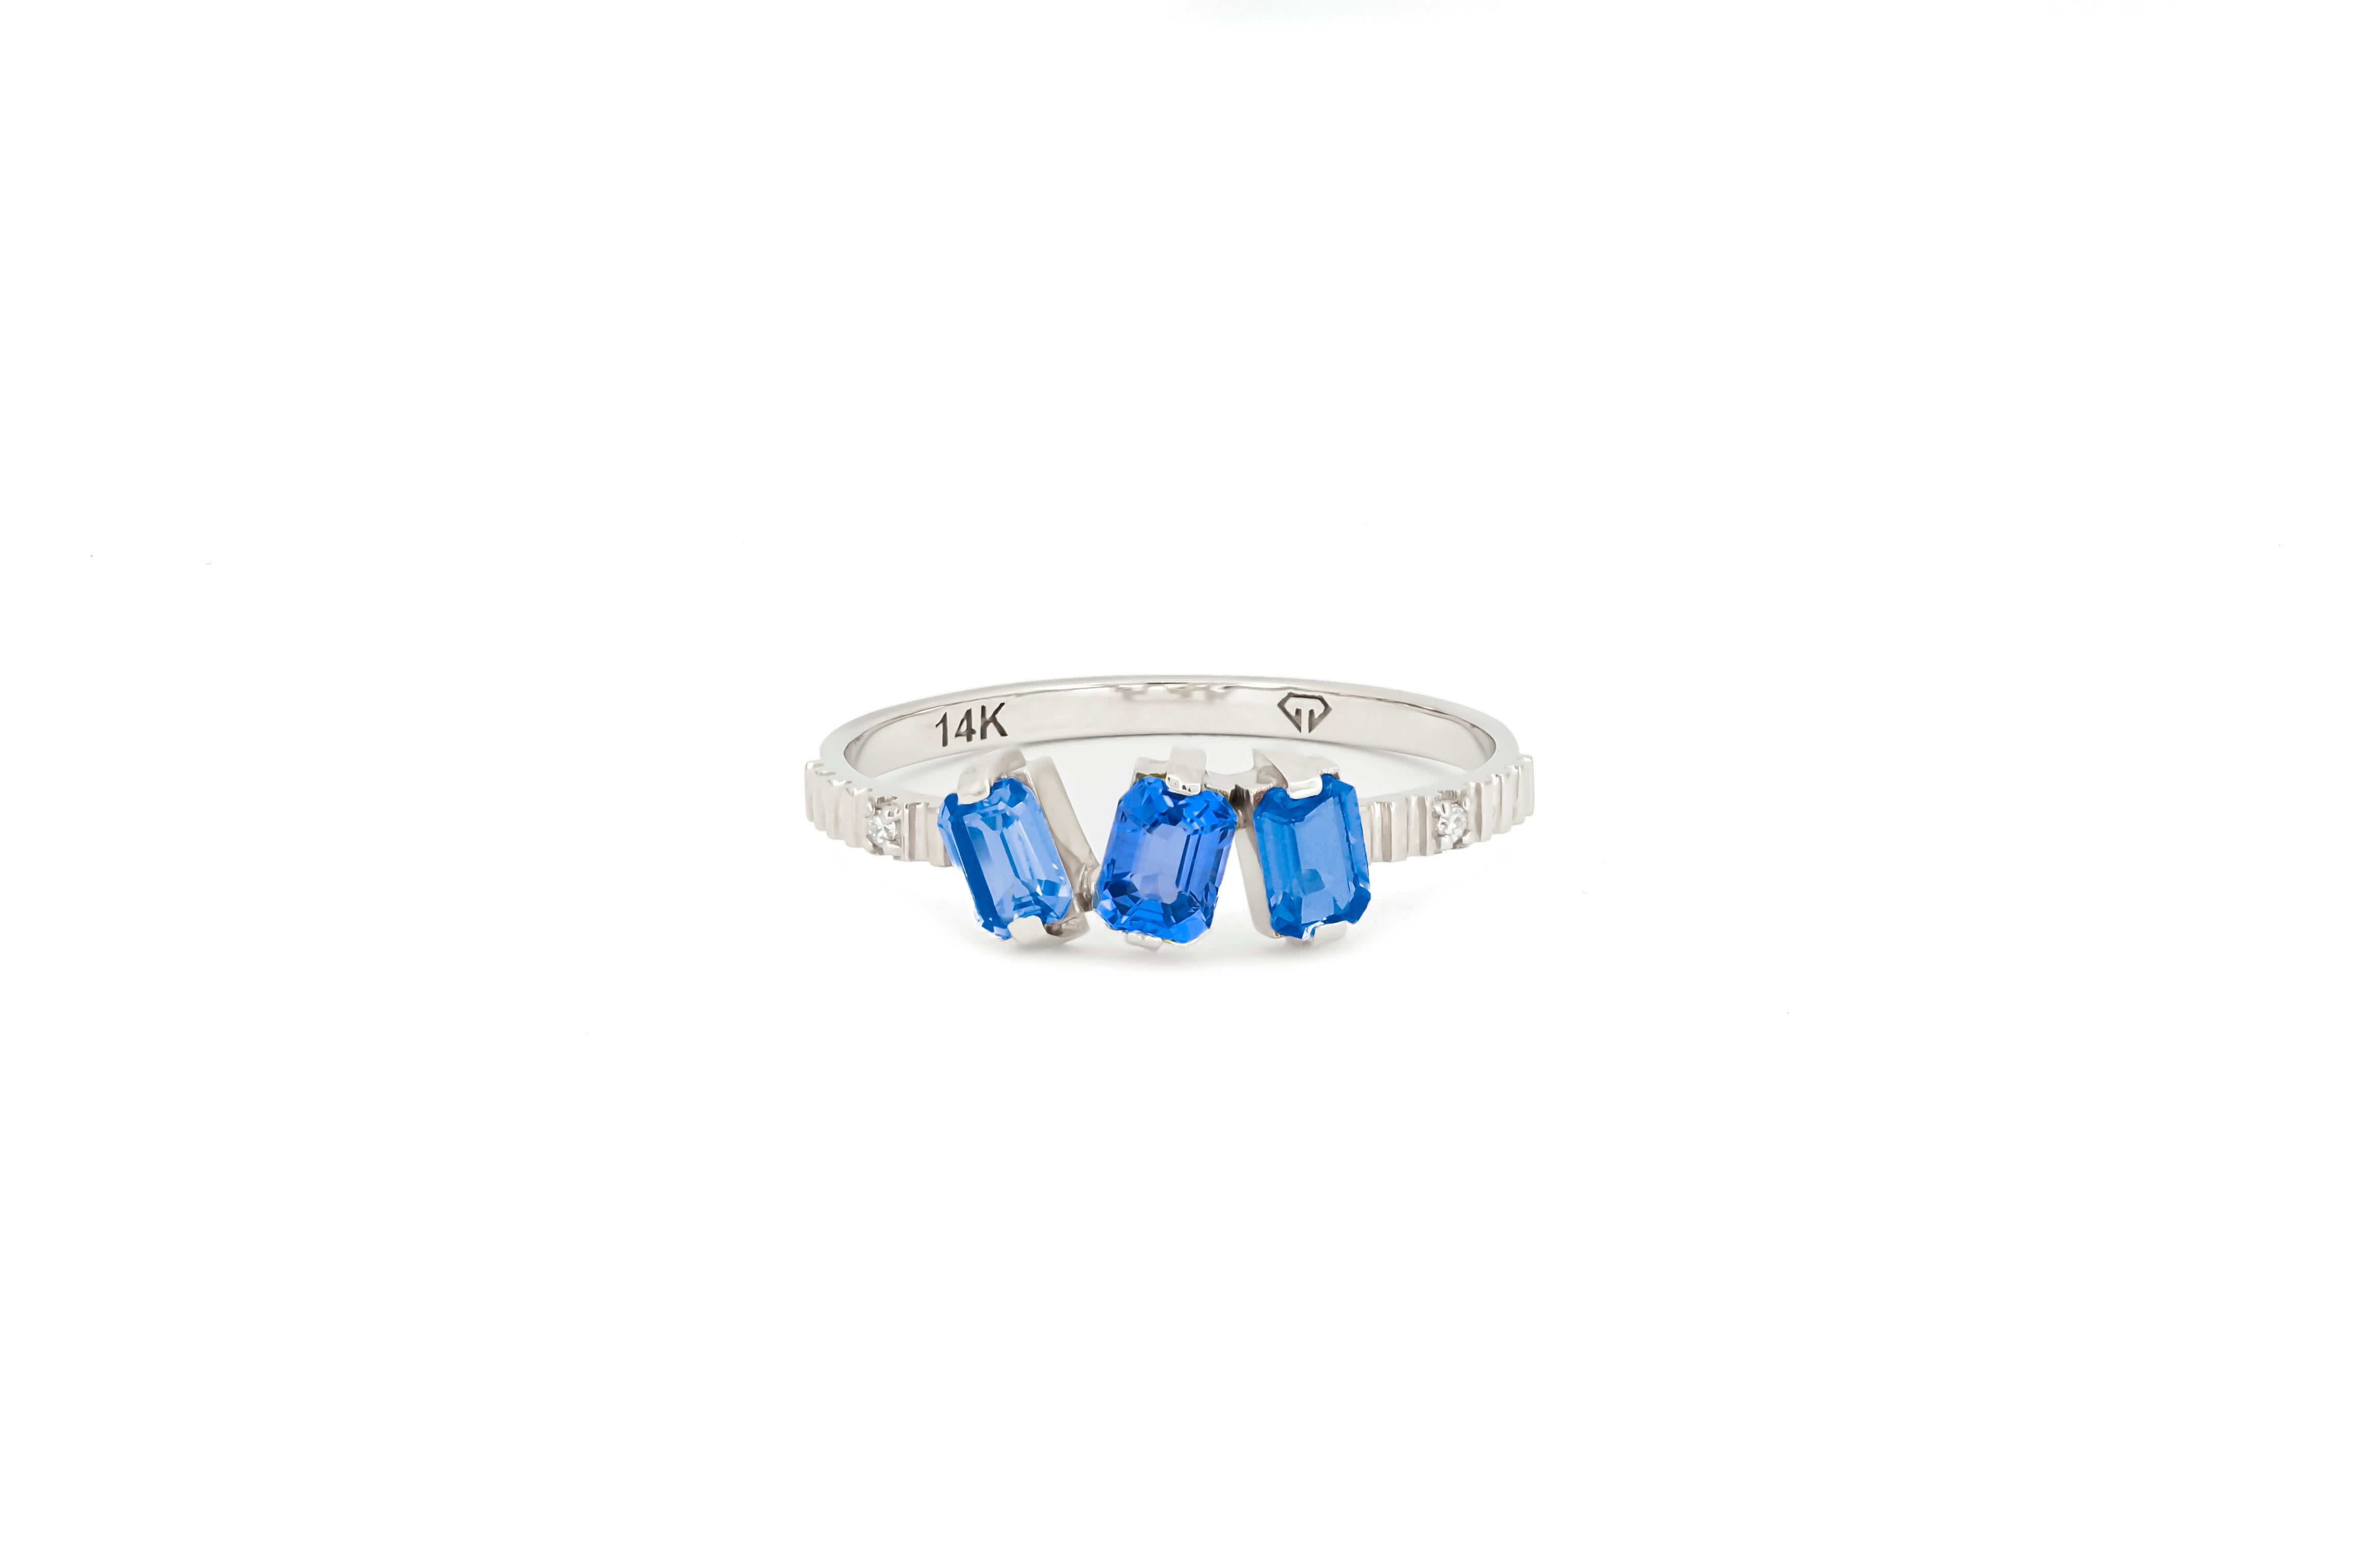 For Sale:  Monochrome blue gemstone 14k ring.  2